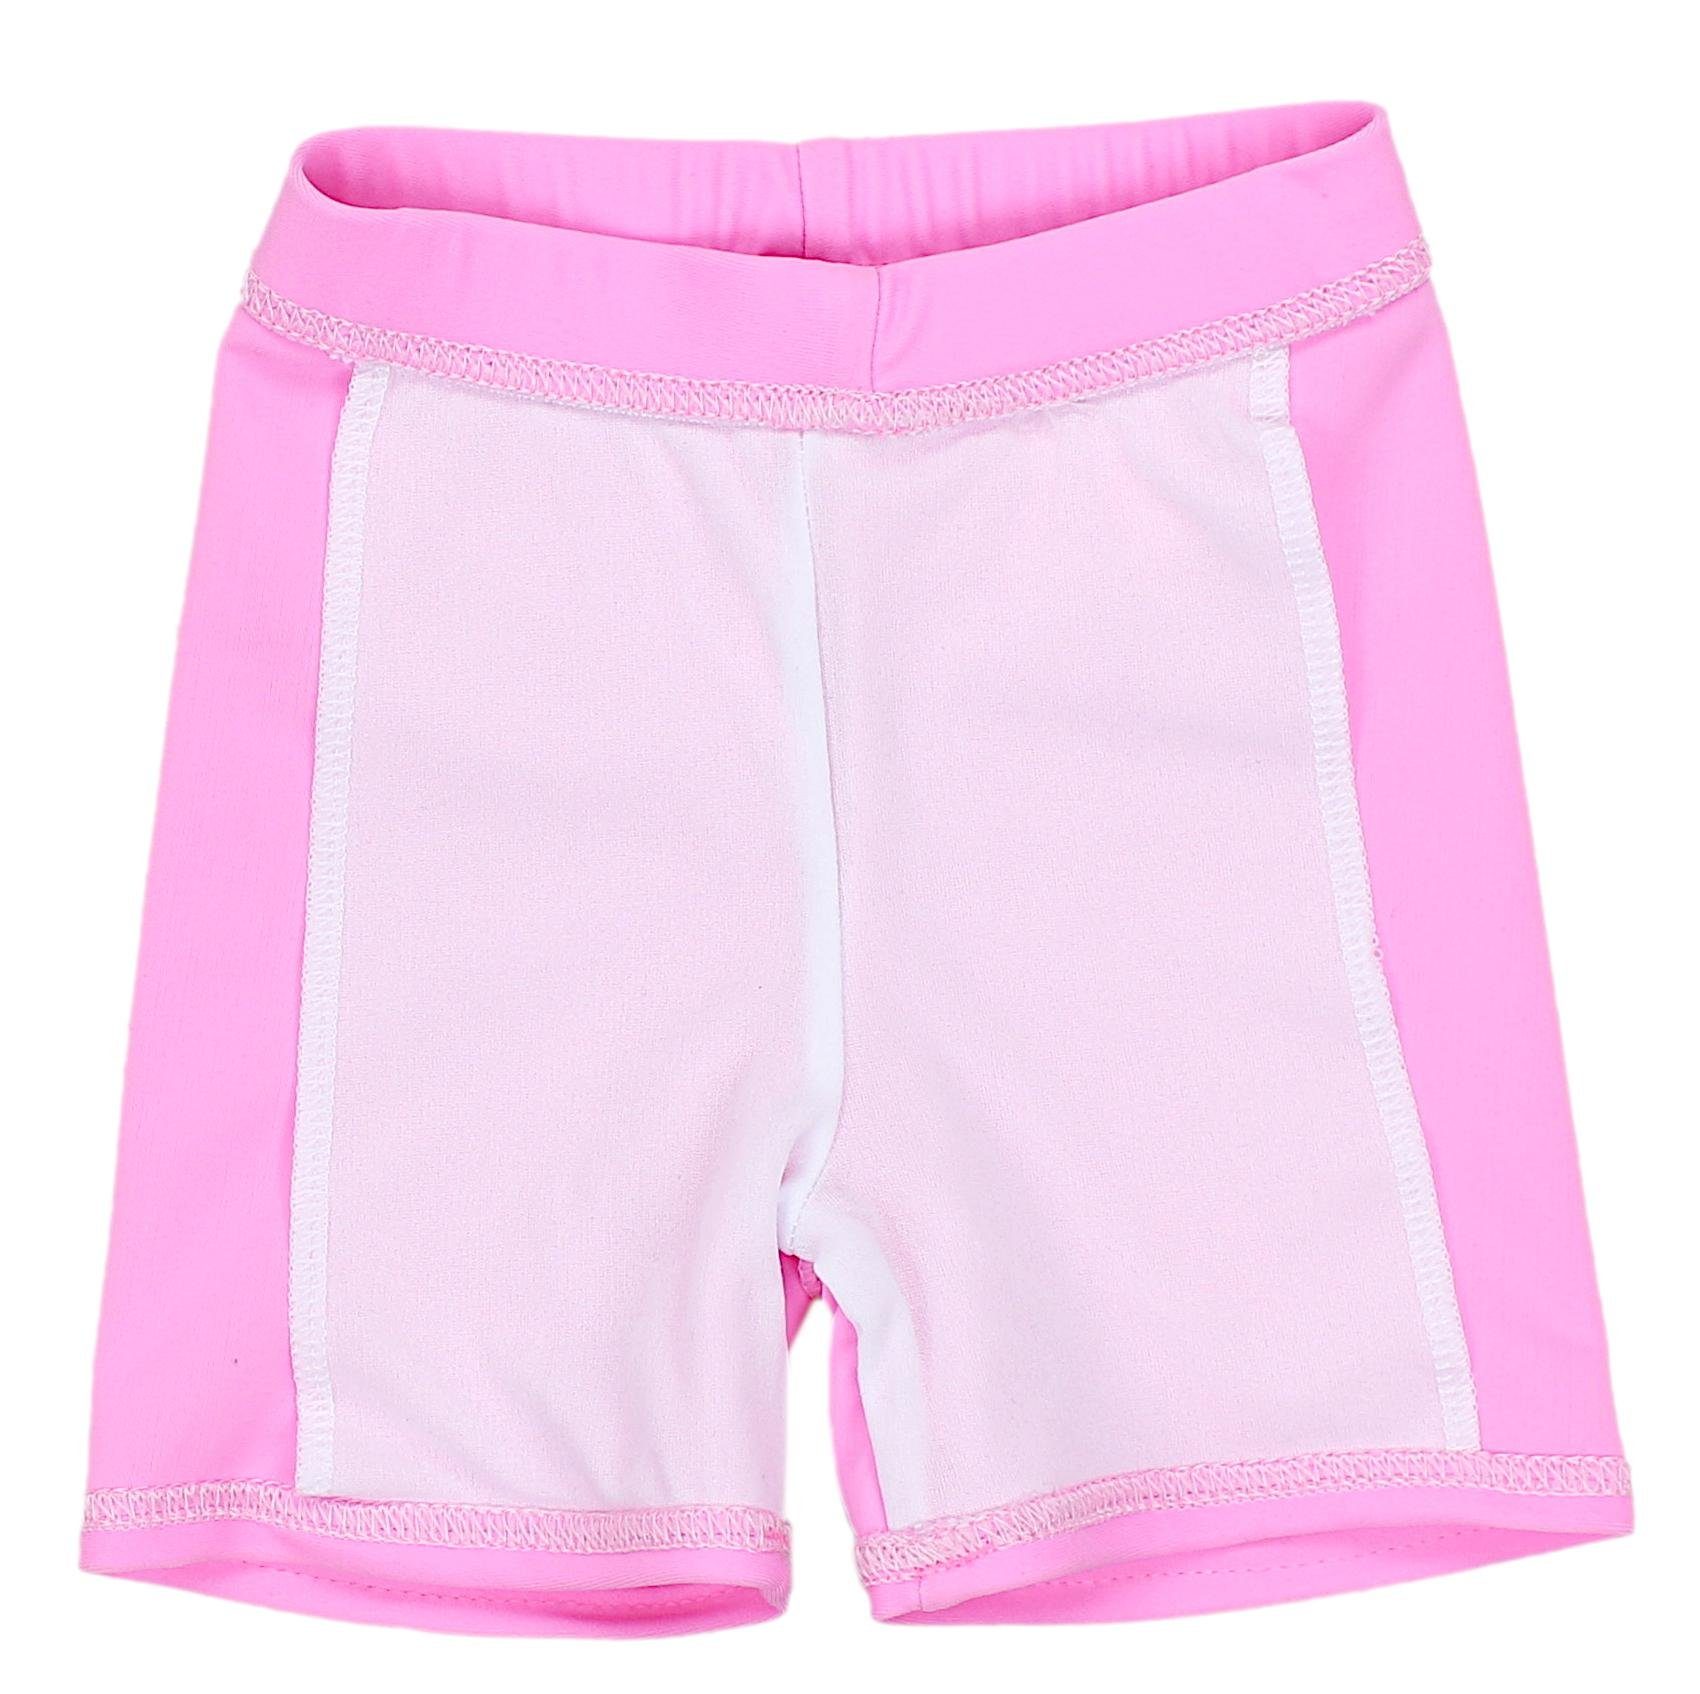 Badeanzug / Badeanzug Baby Aquarti Zweiteiler Mädchen Badehose Flamingos Shirt UV-Schutz Set Rosa Kinder Hellgrün